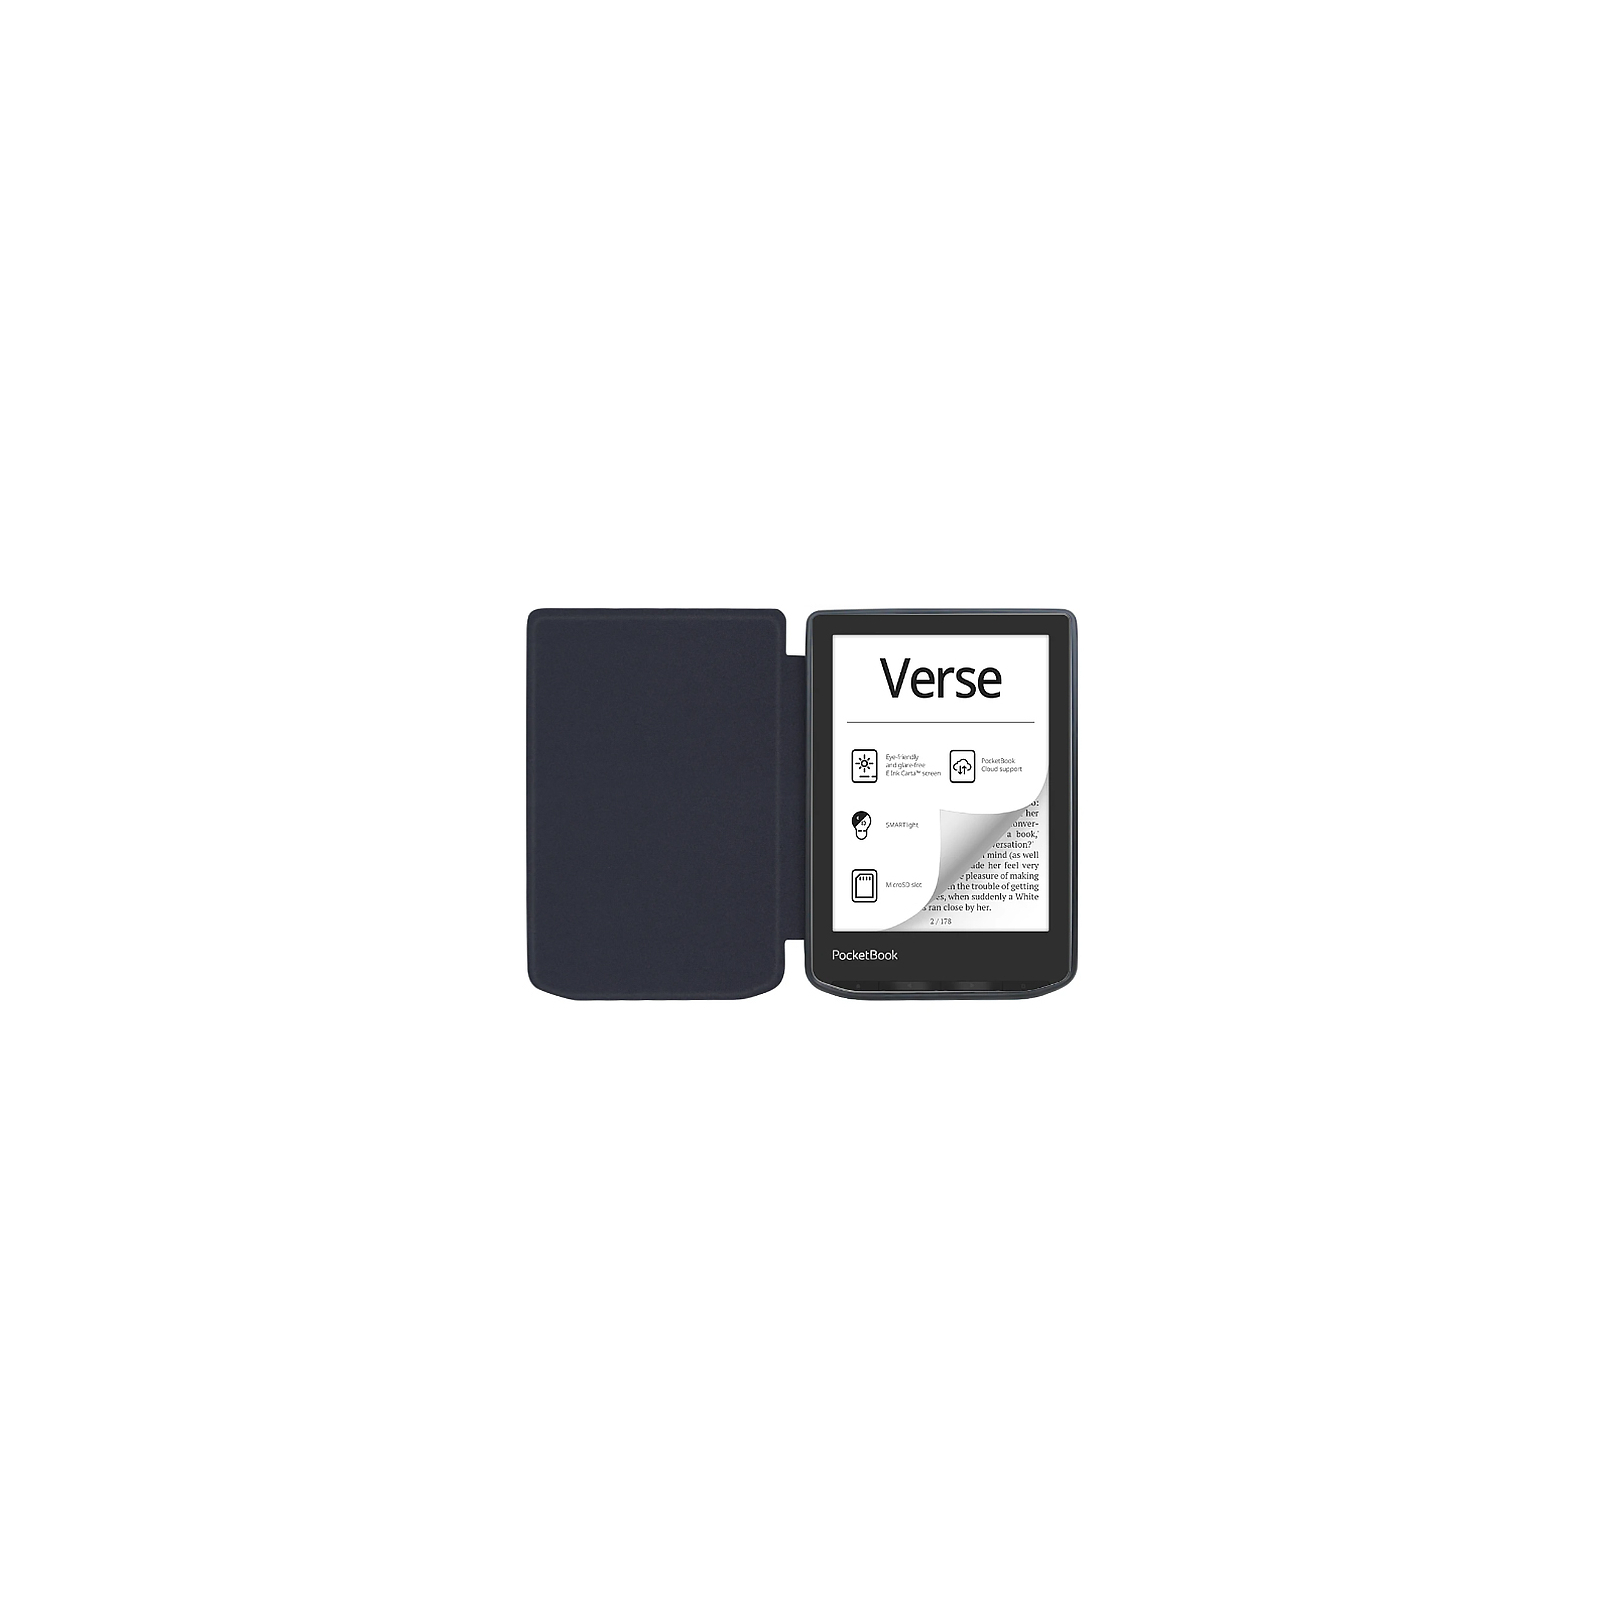 Чохол до електронної книги BeCover Smart Case PocketBook 629 Verse / 634 Verse Pro 6" Red (710979) зображення 8